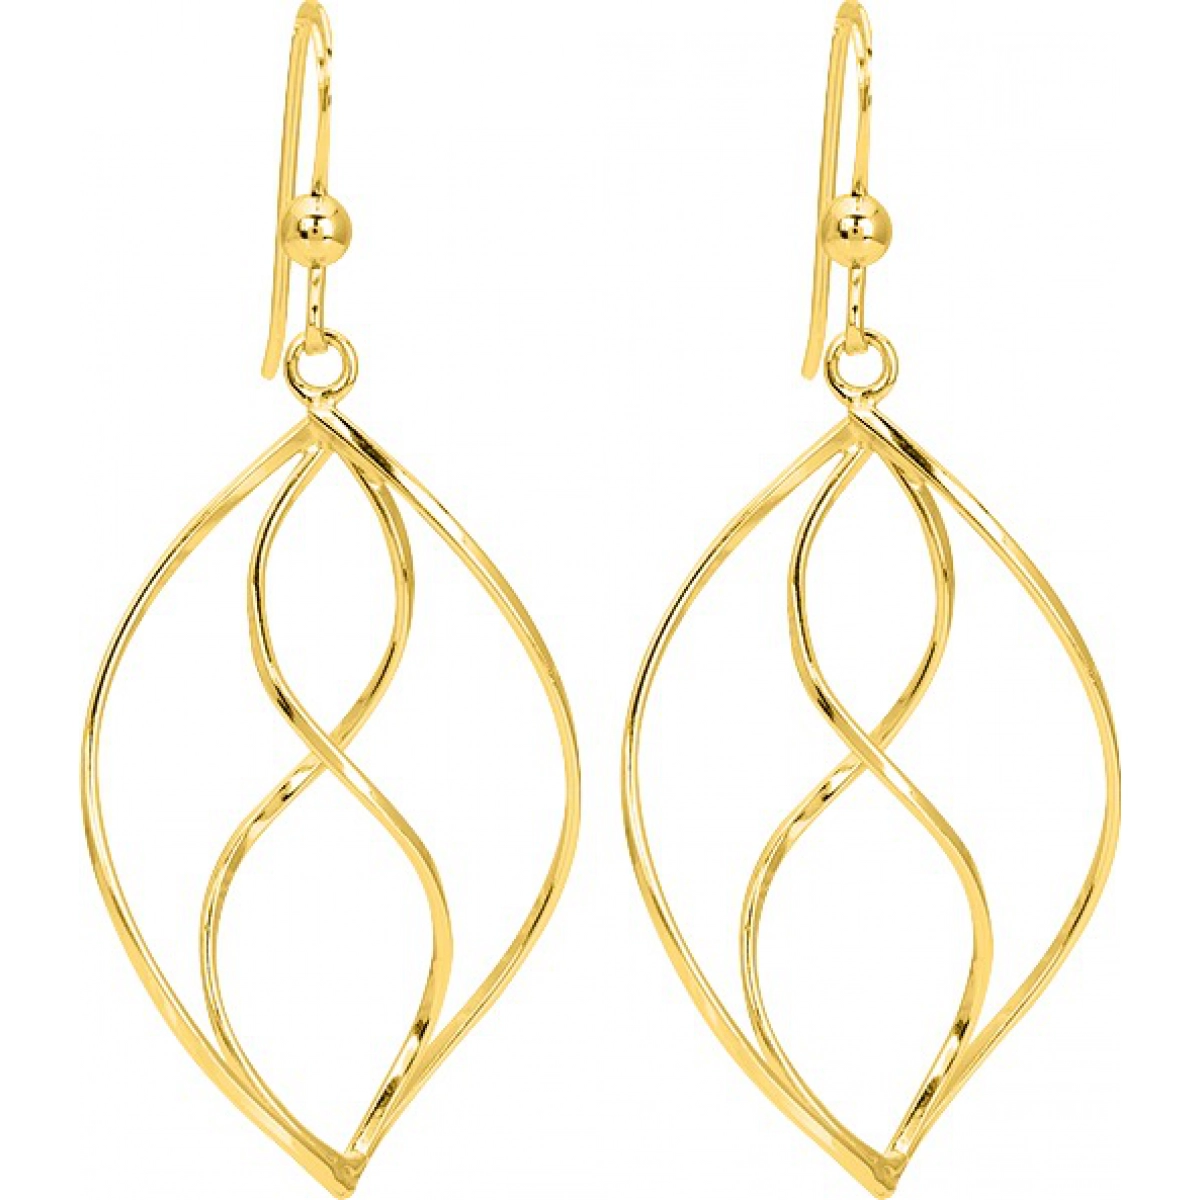 Earrings pair gold plated Brass Lua Blanca  135085.0